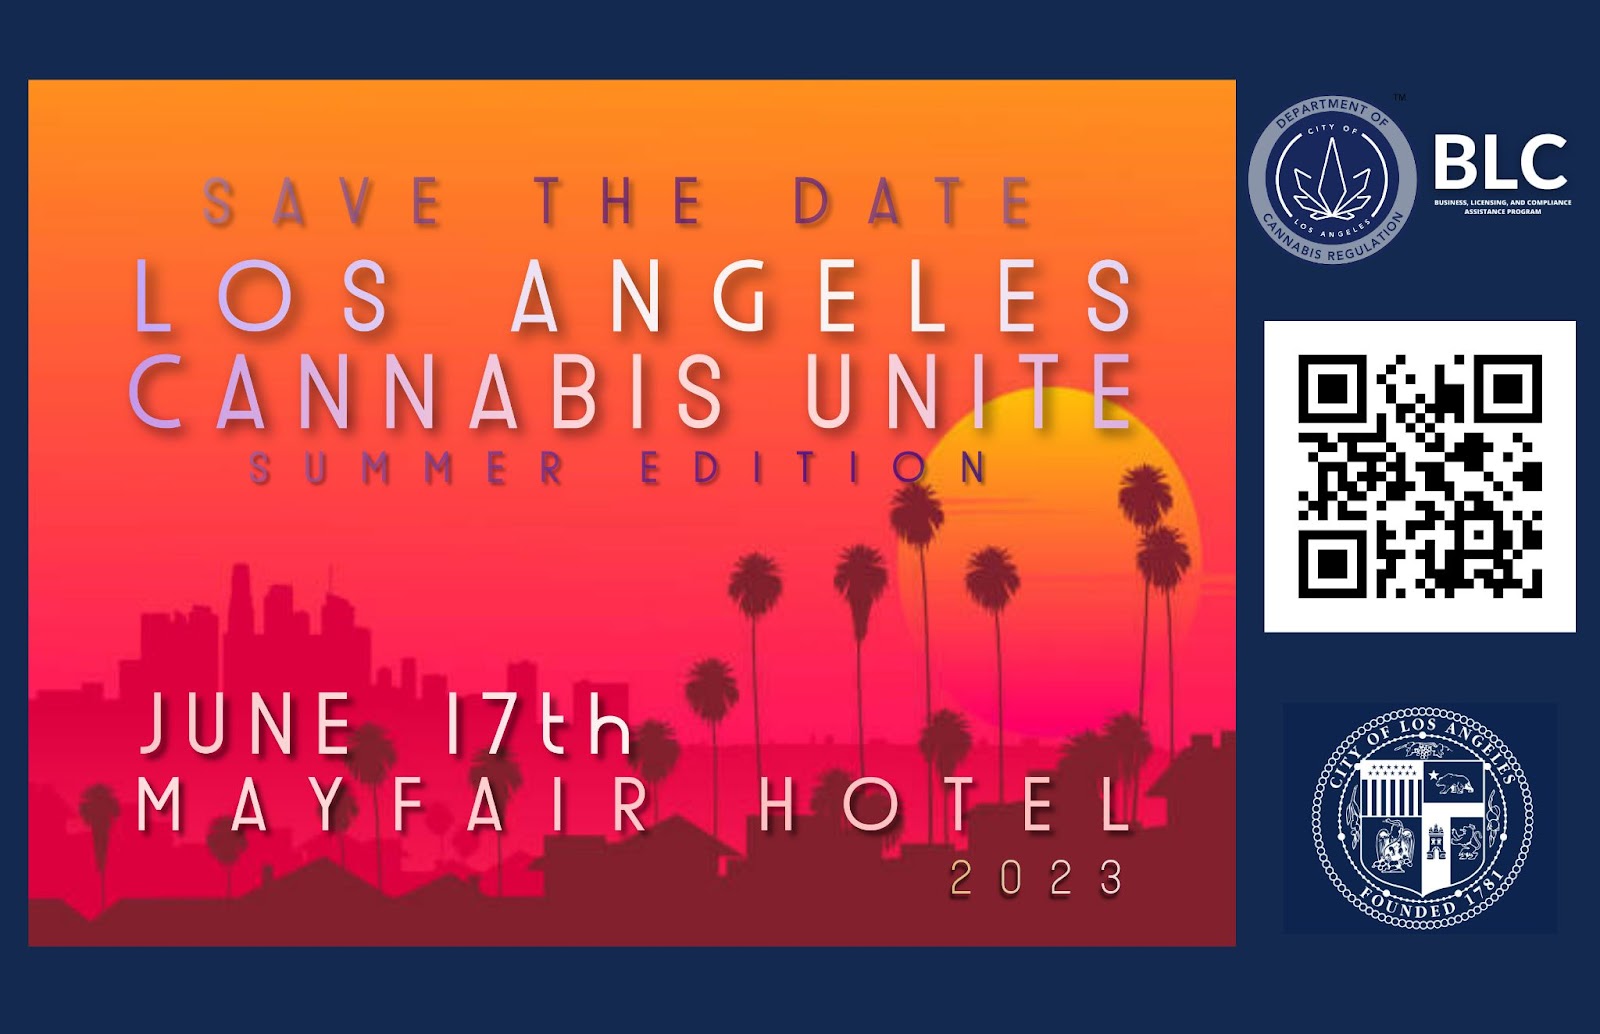 June 17th Mayfair Hotel, Los Angeles Cannabis Unite Summer Edition 